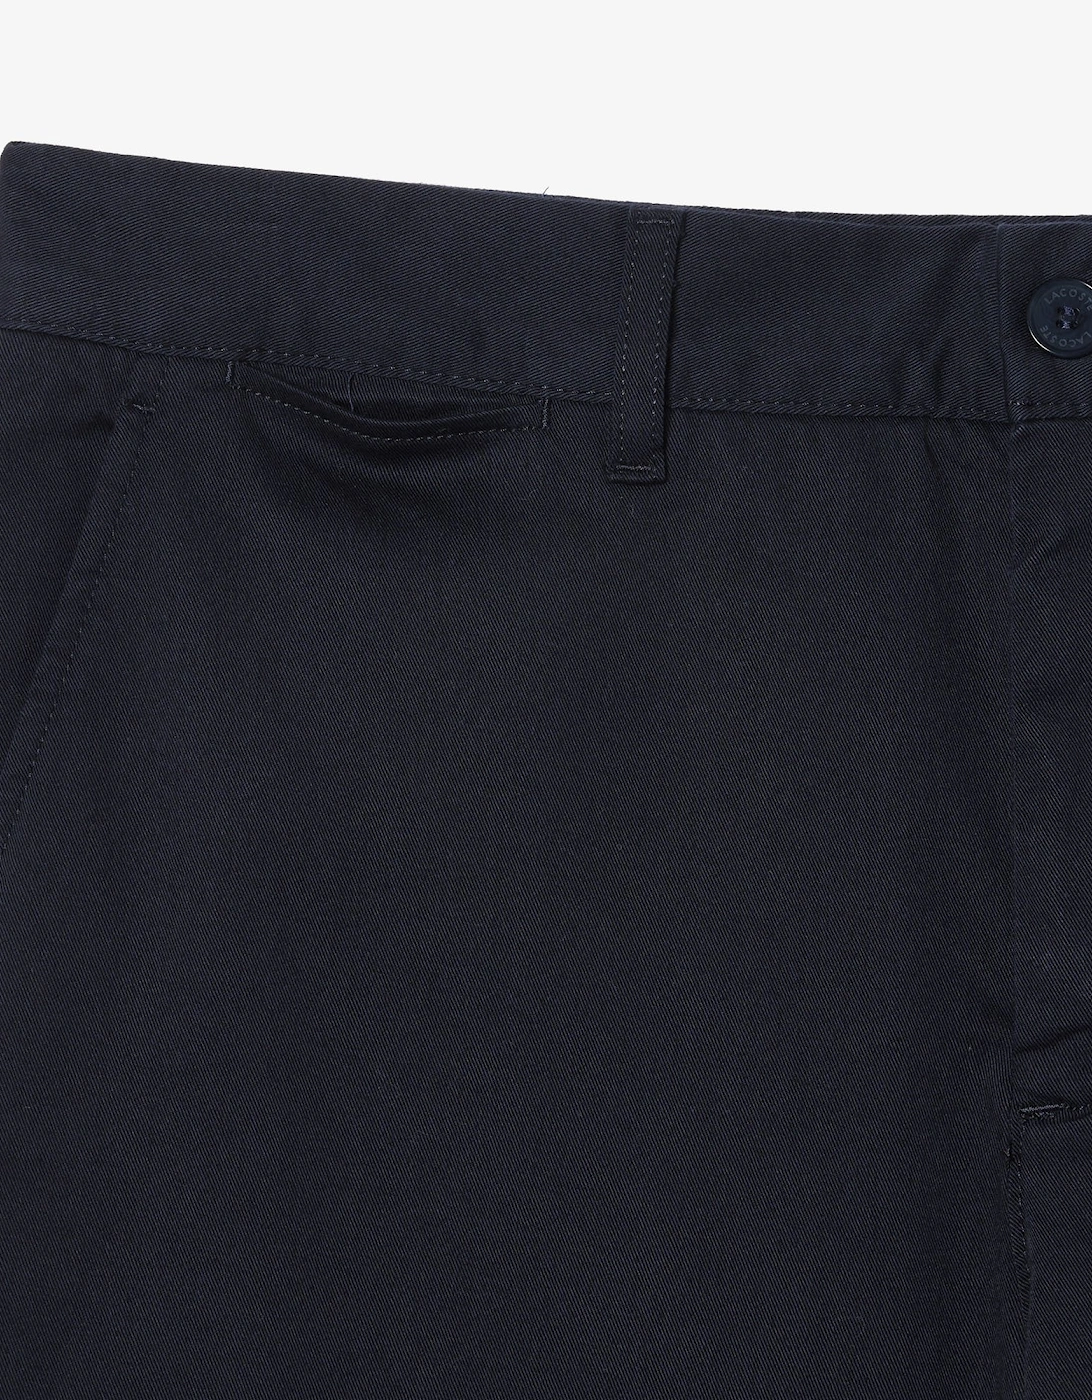 Men's Slim Fit Navy Chino Pants